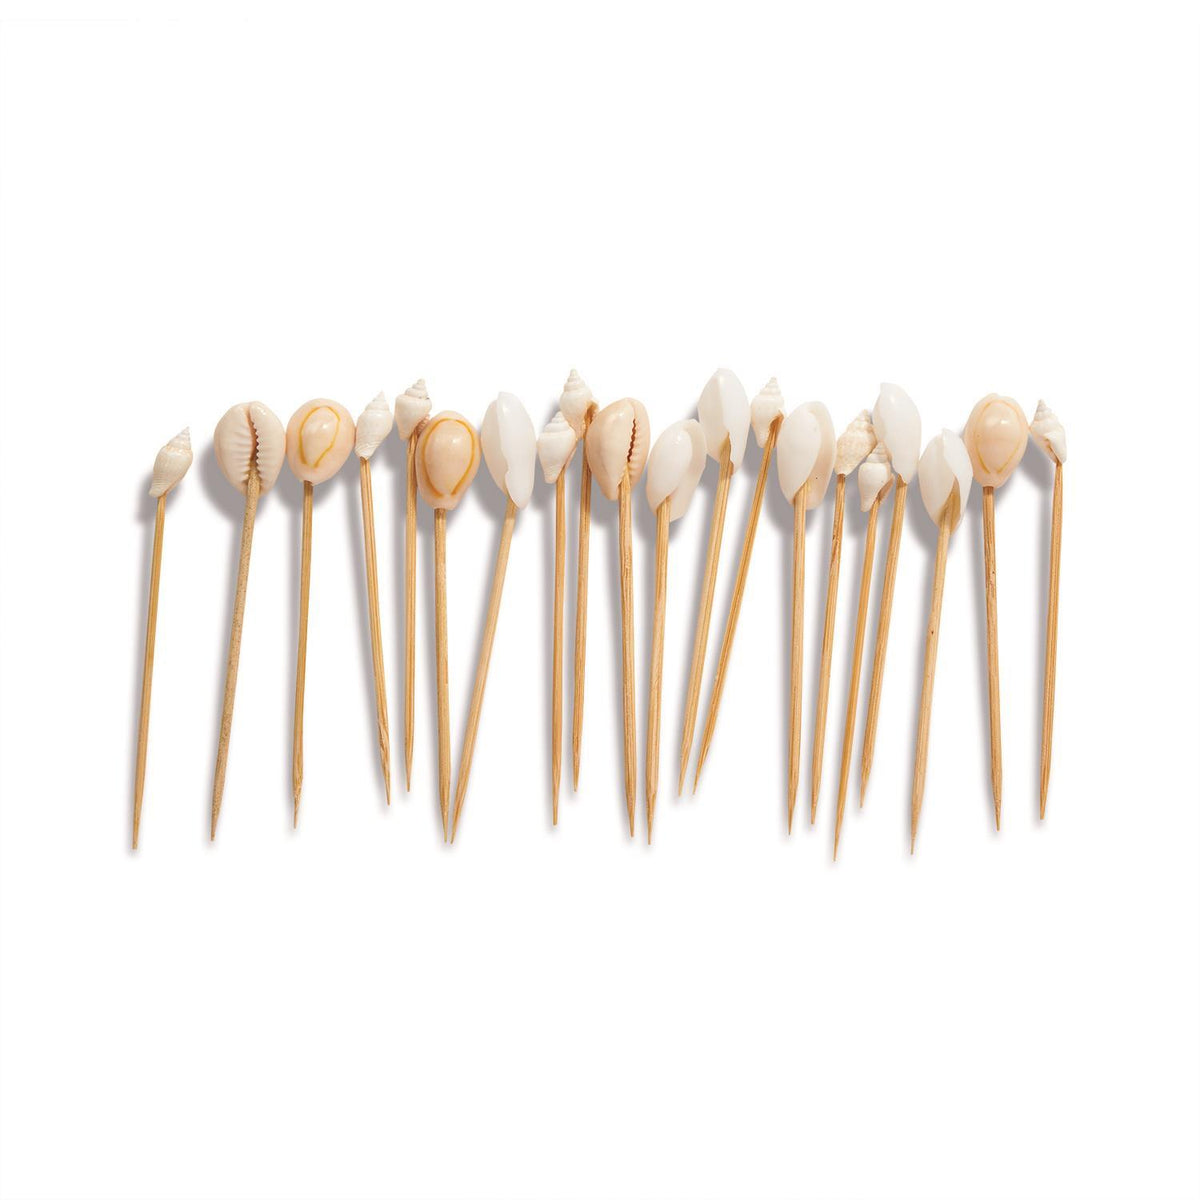 Seashell Hors D'Oeuvre Toothpicks